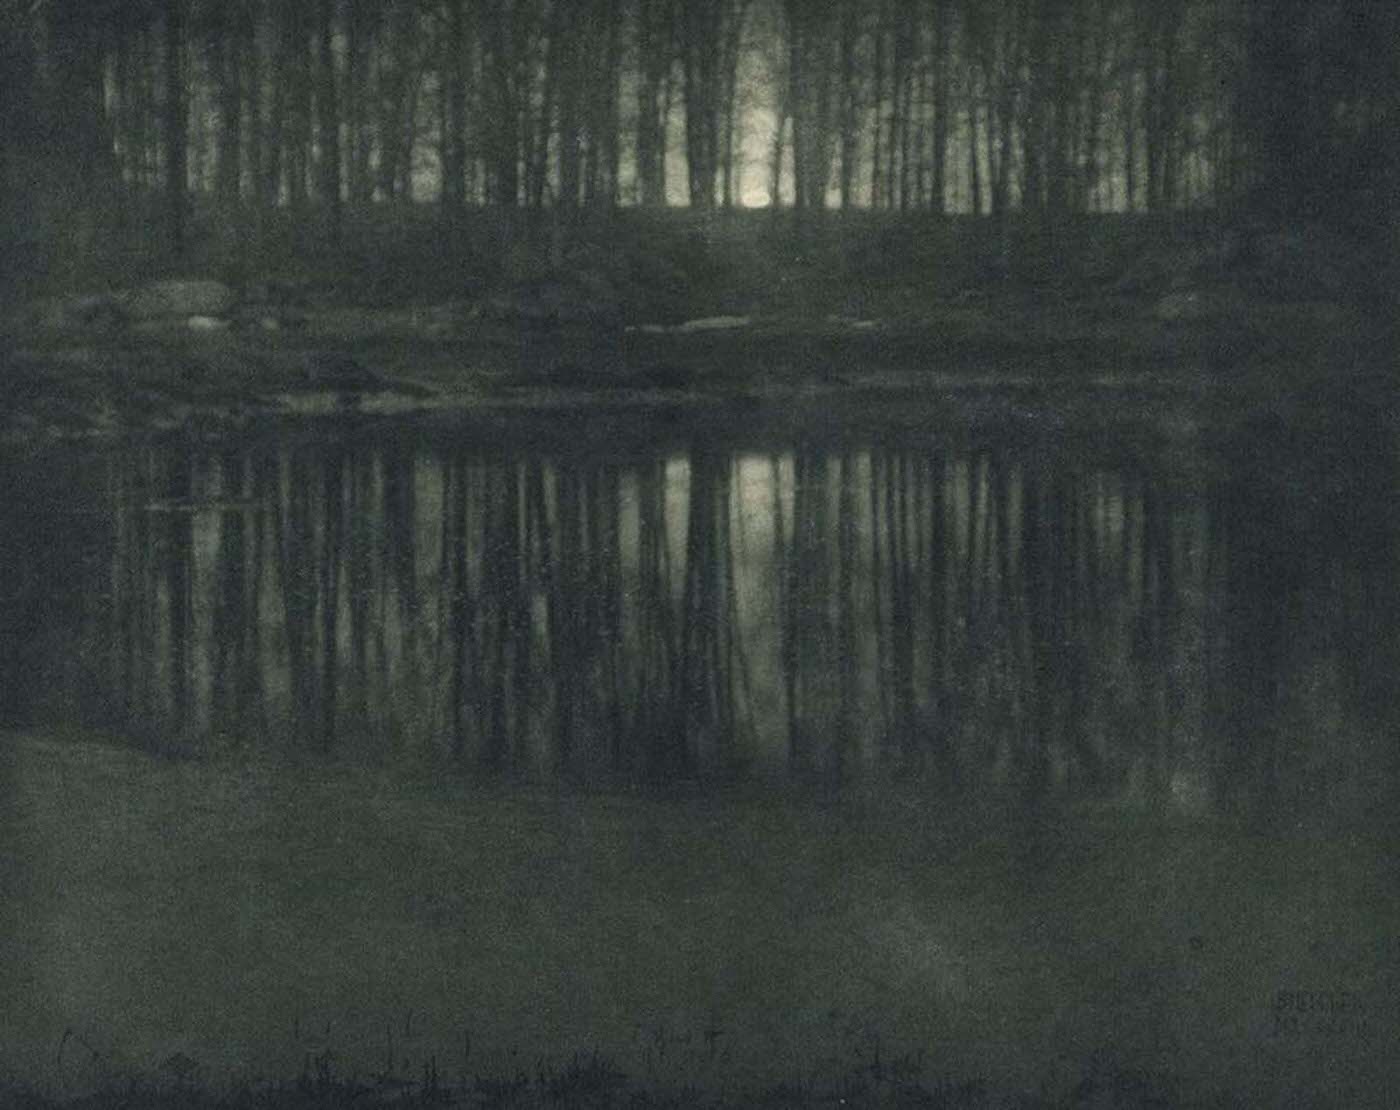 Moonlight: The Pond, 1904